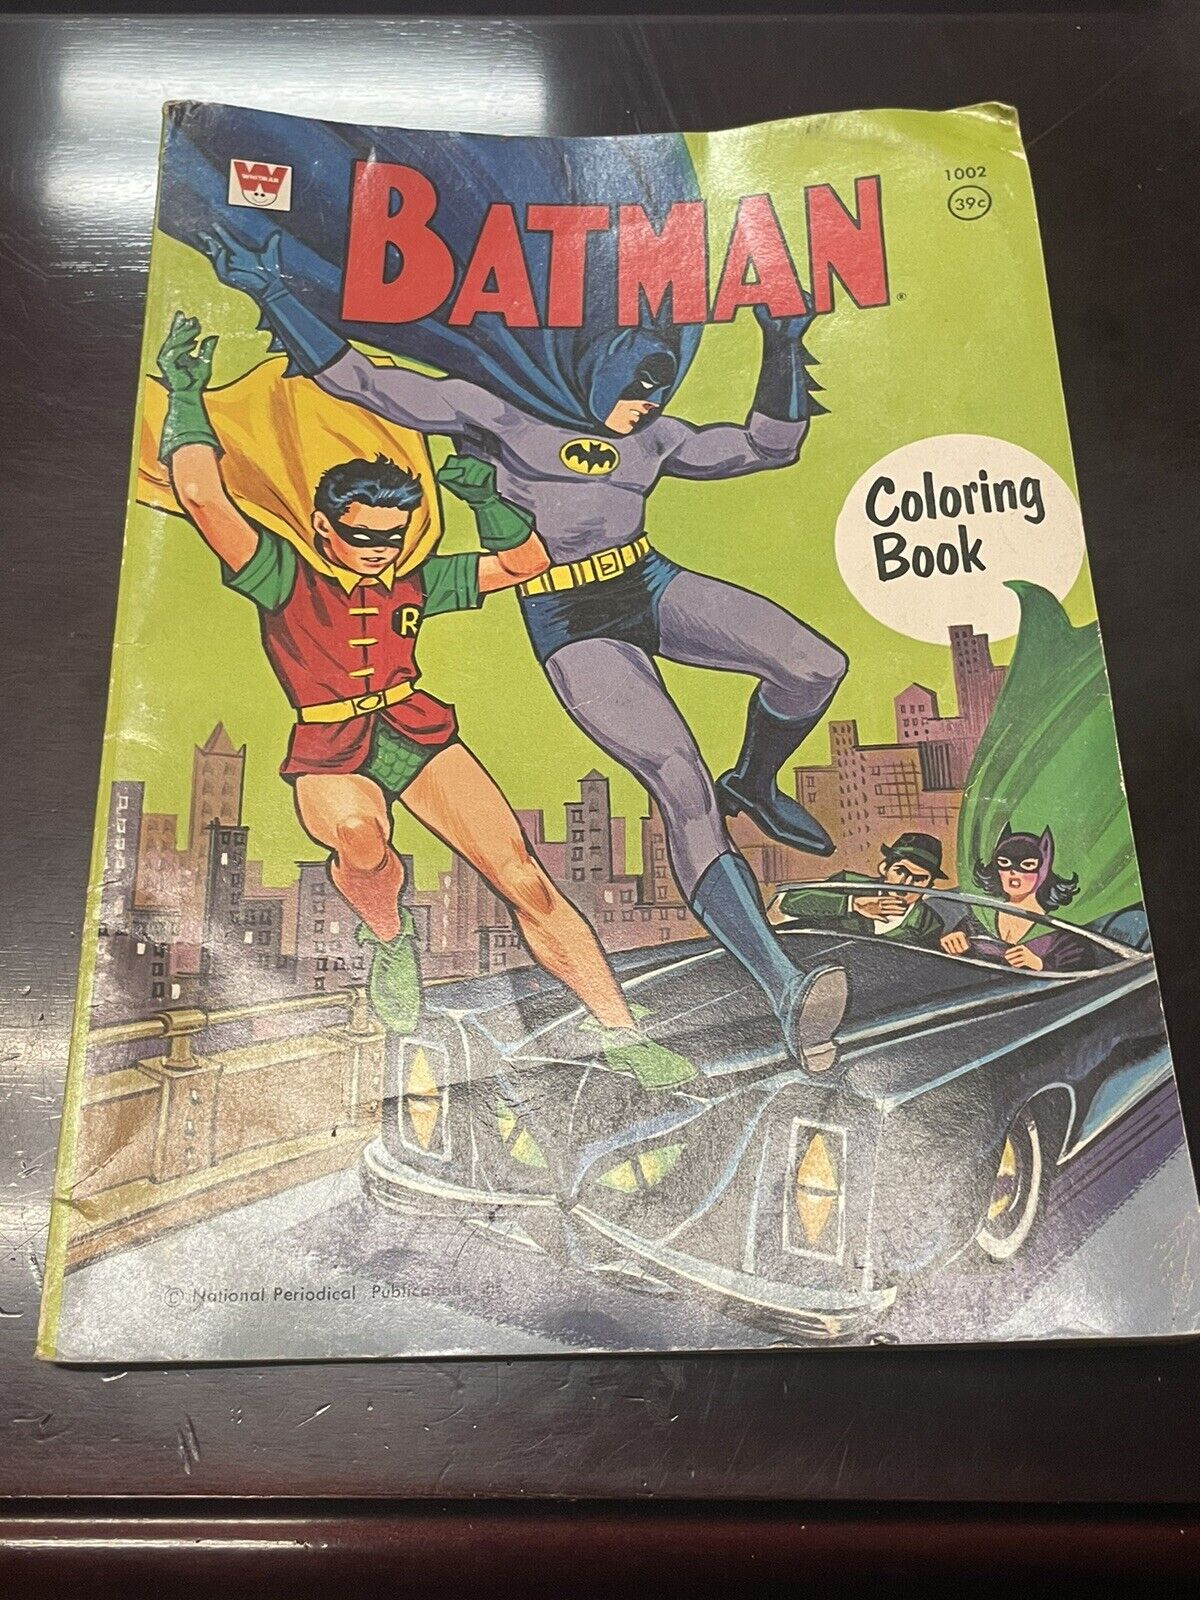 Batman - VINTAGE COLORING BOOK, 1967, #1002 Whitman, Nice Condition Near Unused